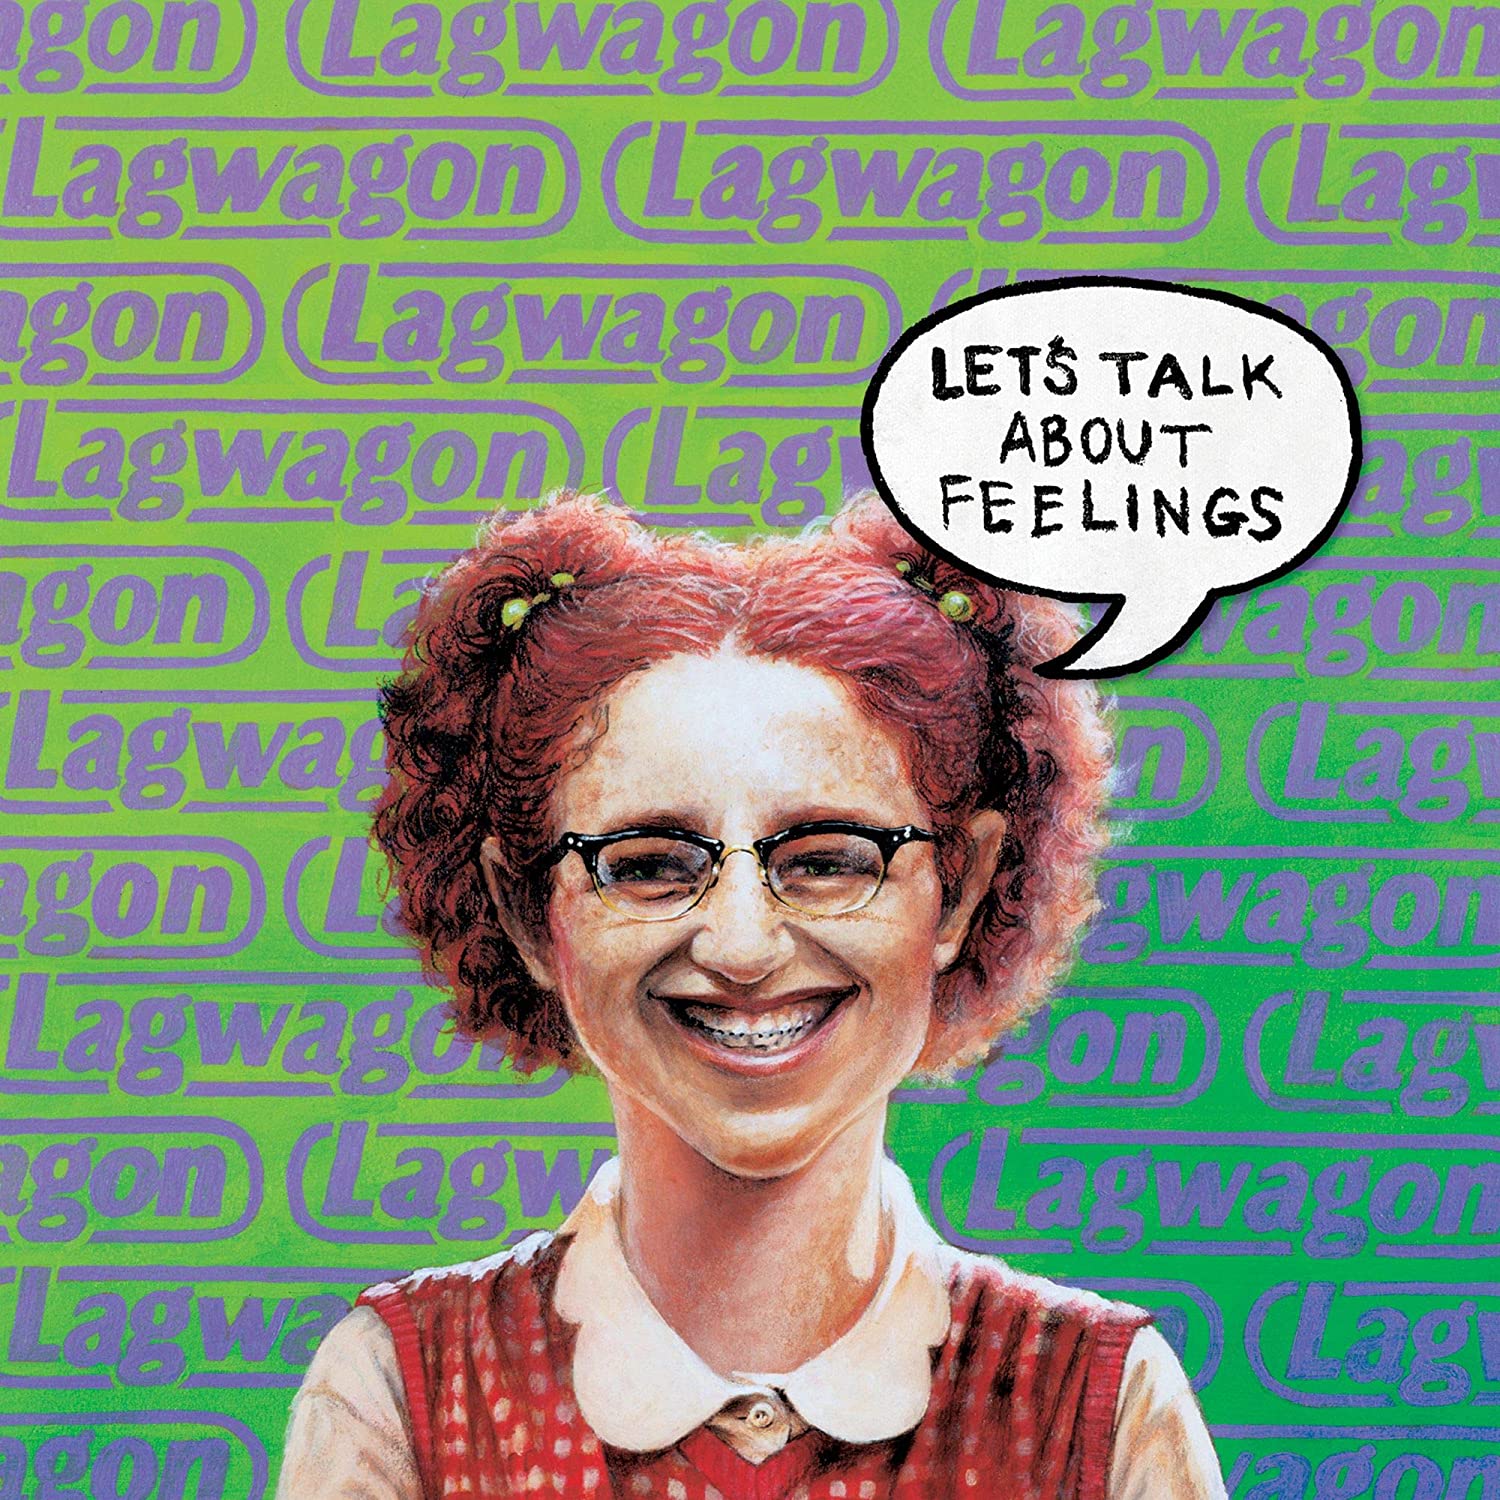 Lagwagon - Let’s Talk About Feelings (Vinyl 2LP)